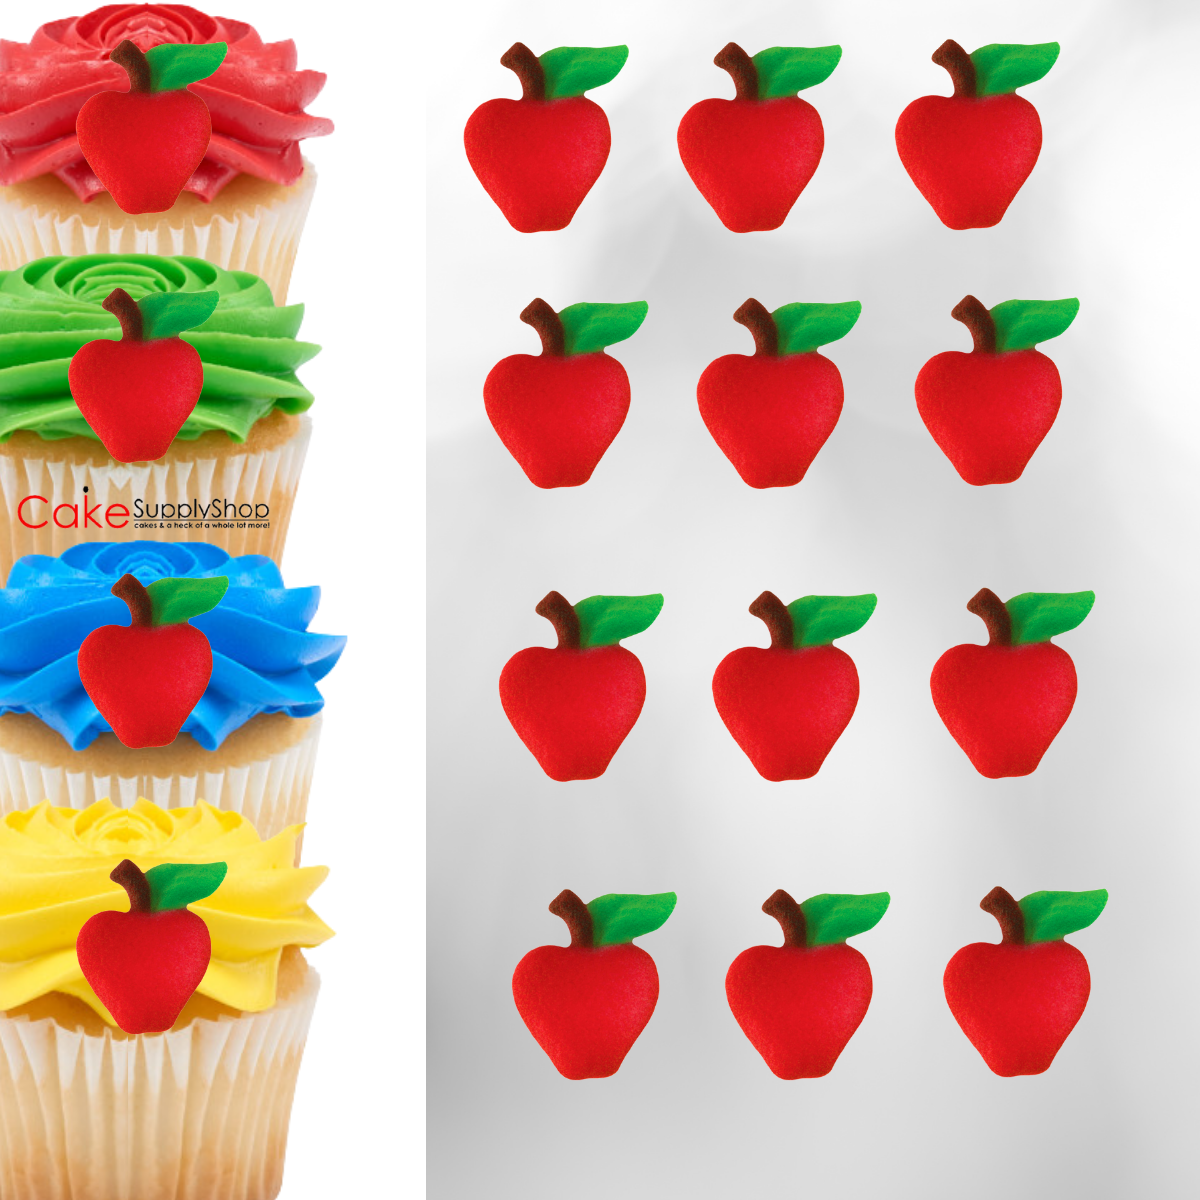 Edible Coloured Seashells Vegan Cupcake Toppers Cake Decorations